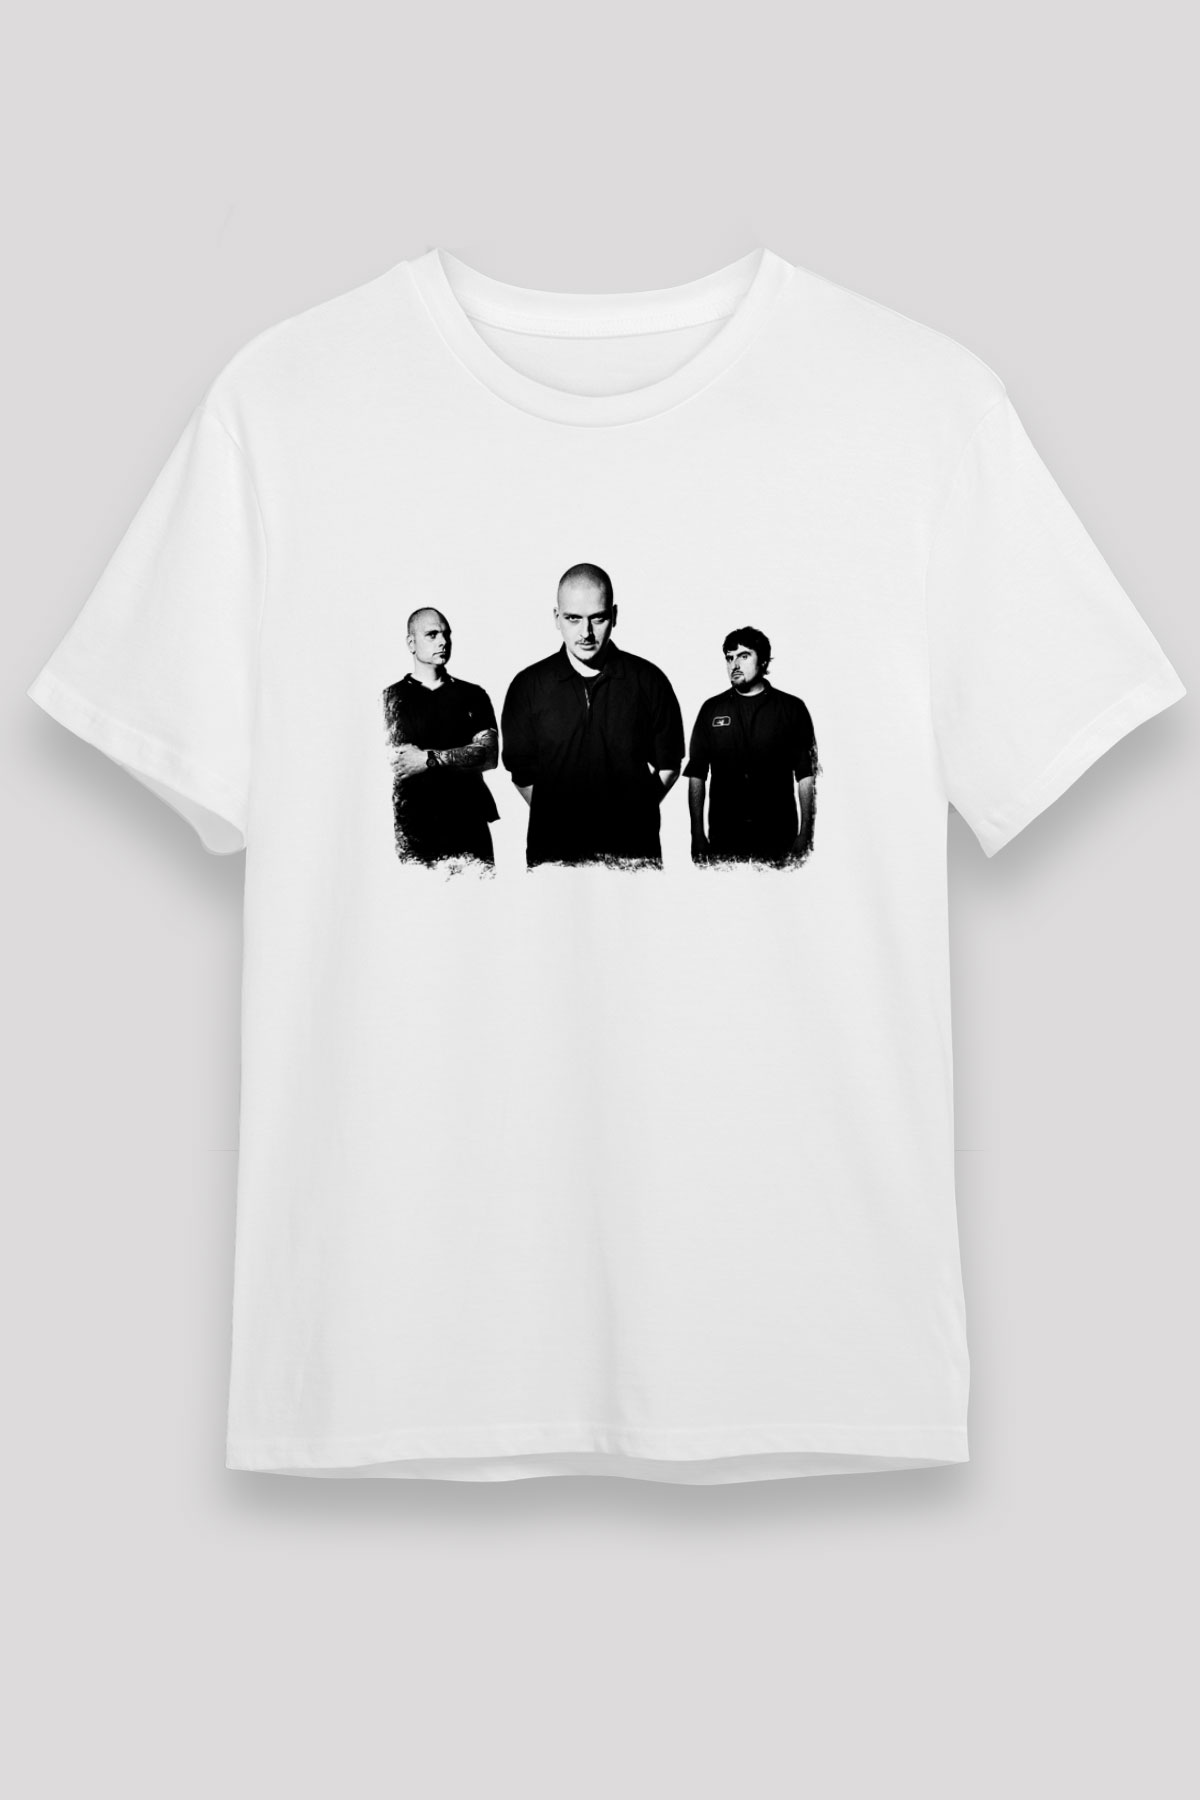 Godflesh T shirt, Music Band ,Unisex Tshirt 04